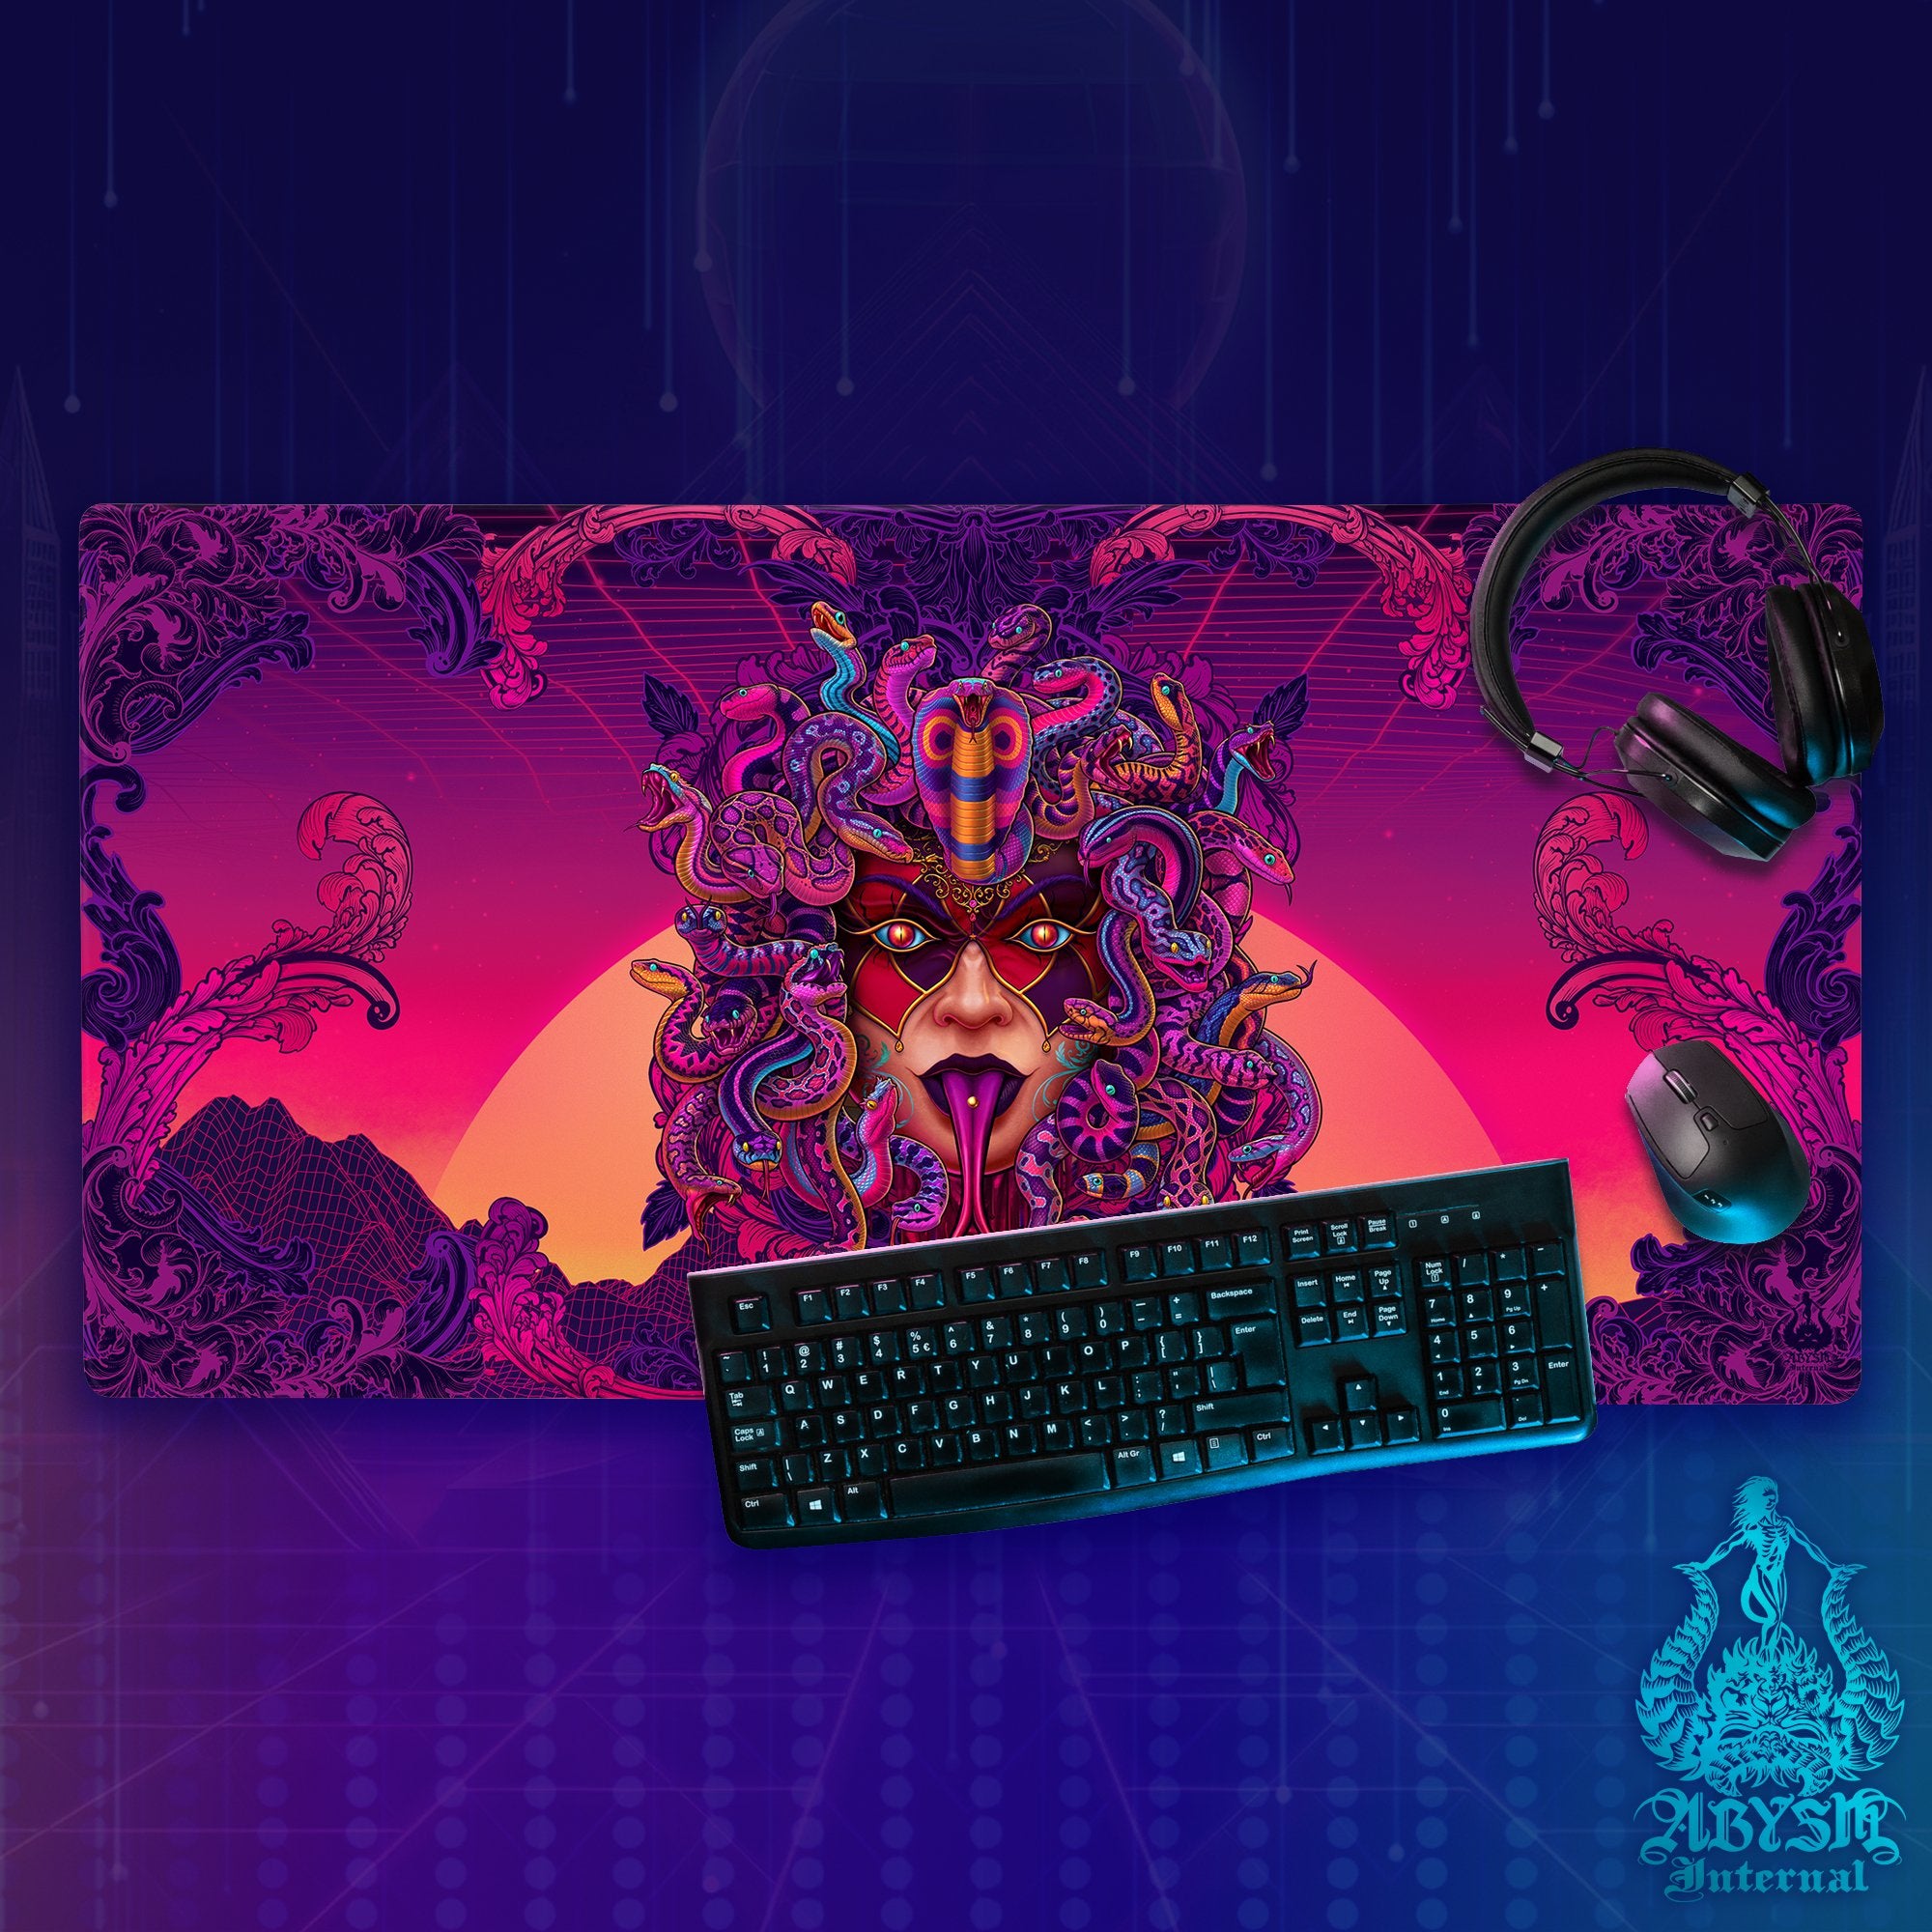 Psychedelic Gaming Mouse Pad, Skull Desk Mat, Gamer Table Protector Cover, Retrowave Medusa Workpad, Fantasy Art Print - Vaporwave, 4 Options - Abysm Internal